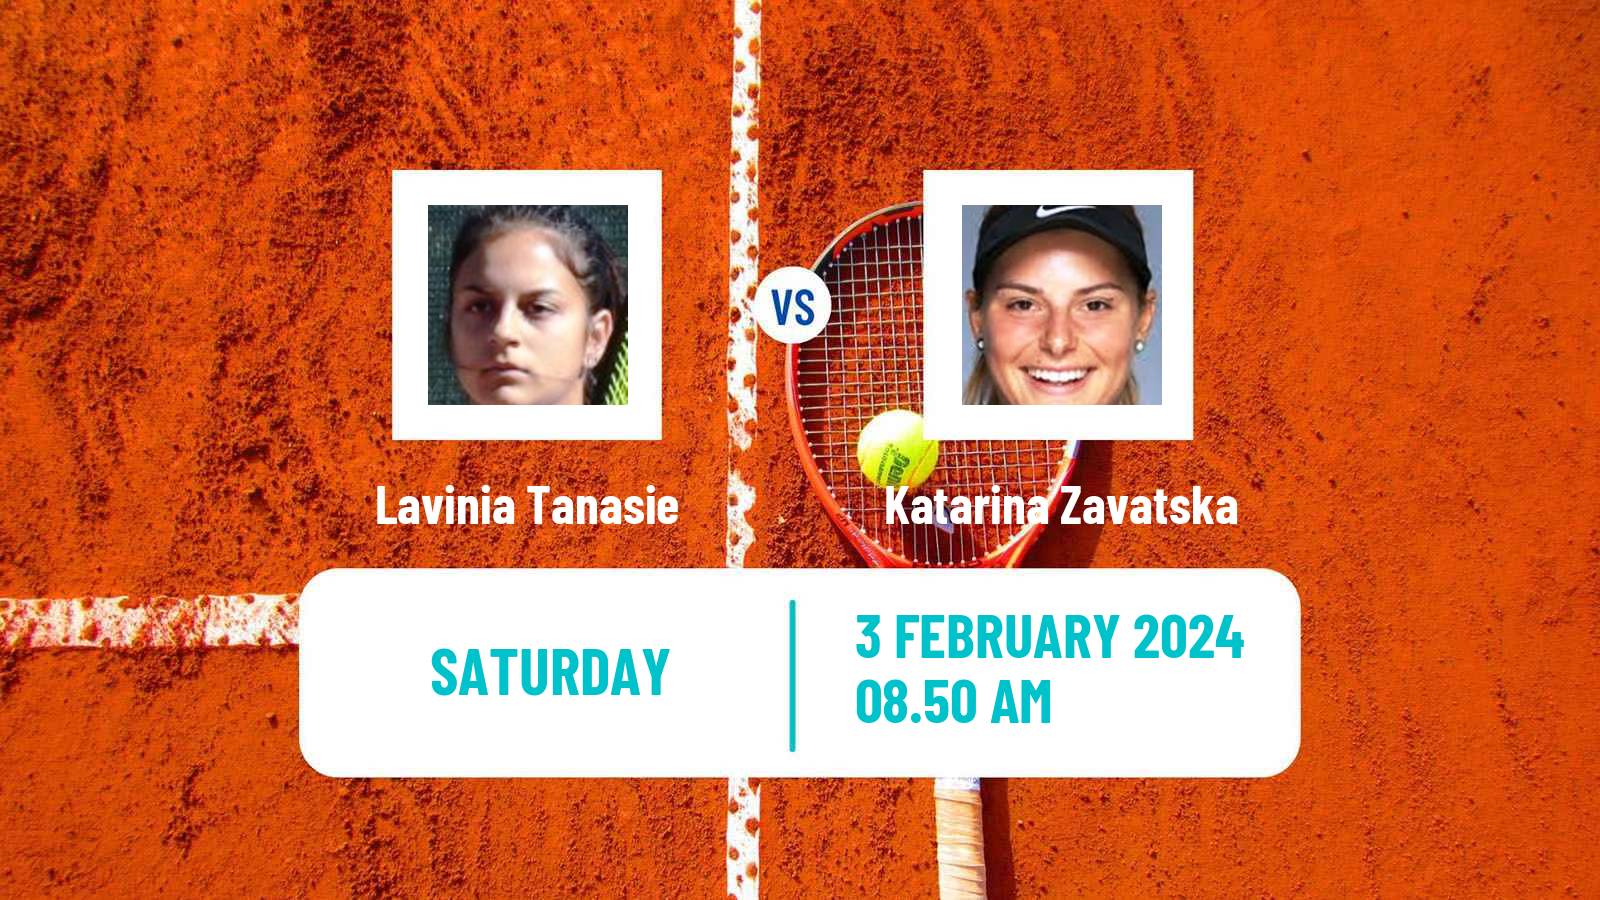 Tennis WTA Cluj Napoca Lavinia Tanasie - Katarina Zavatska